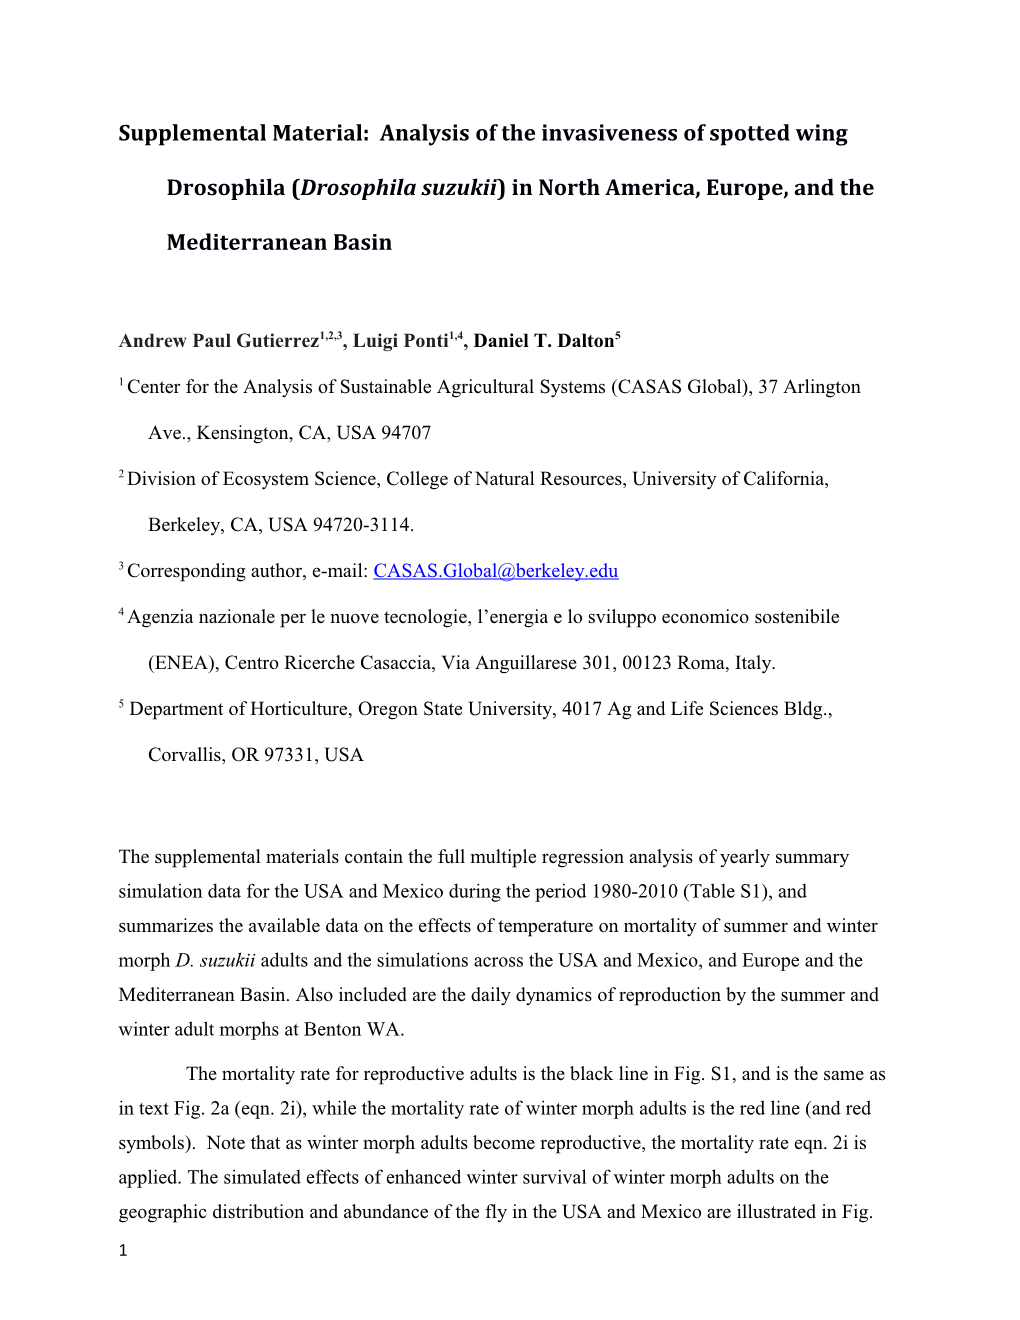 Supplemental Material: Analysis of the Invasiveness of Spotted Wing Drosophila (Drosophila